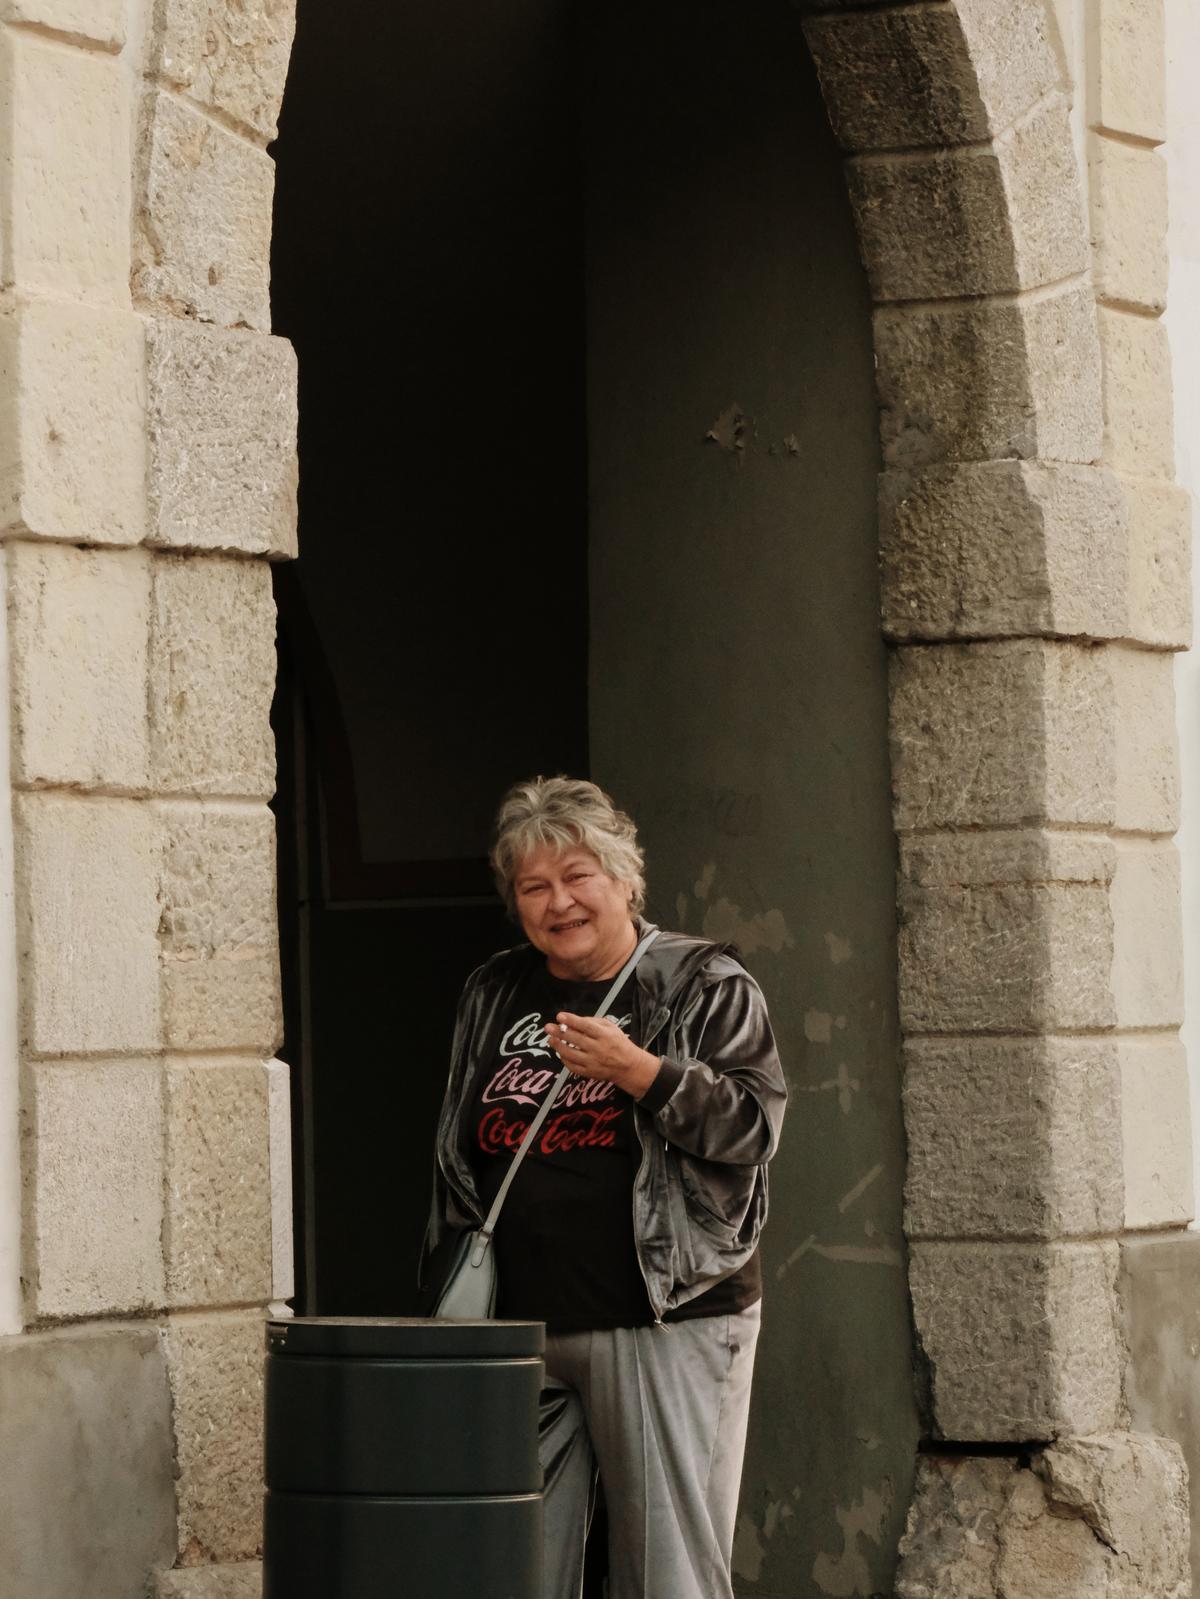 The woman who’s photo I asked to take in Idrija, Slovenia